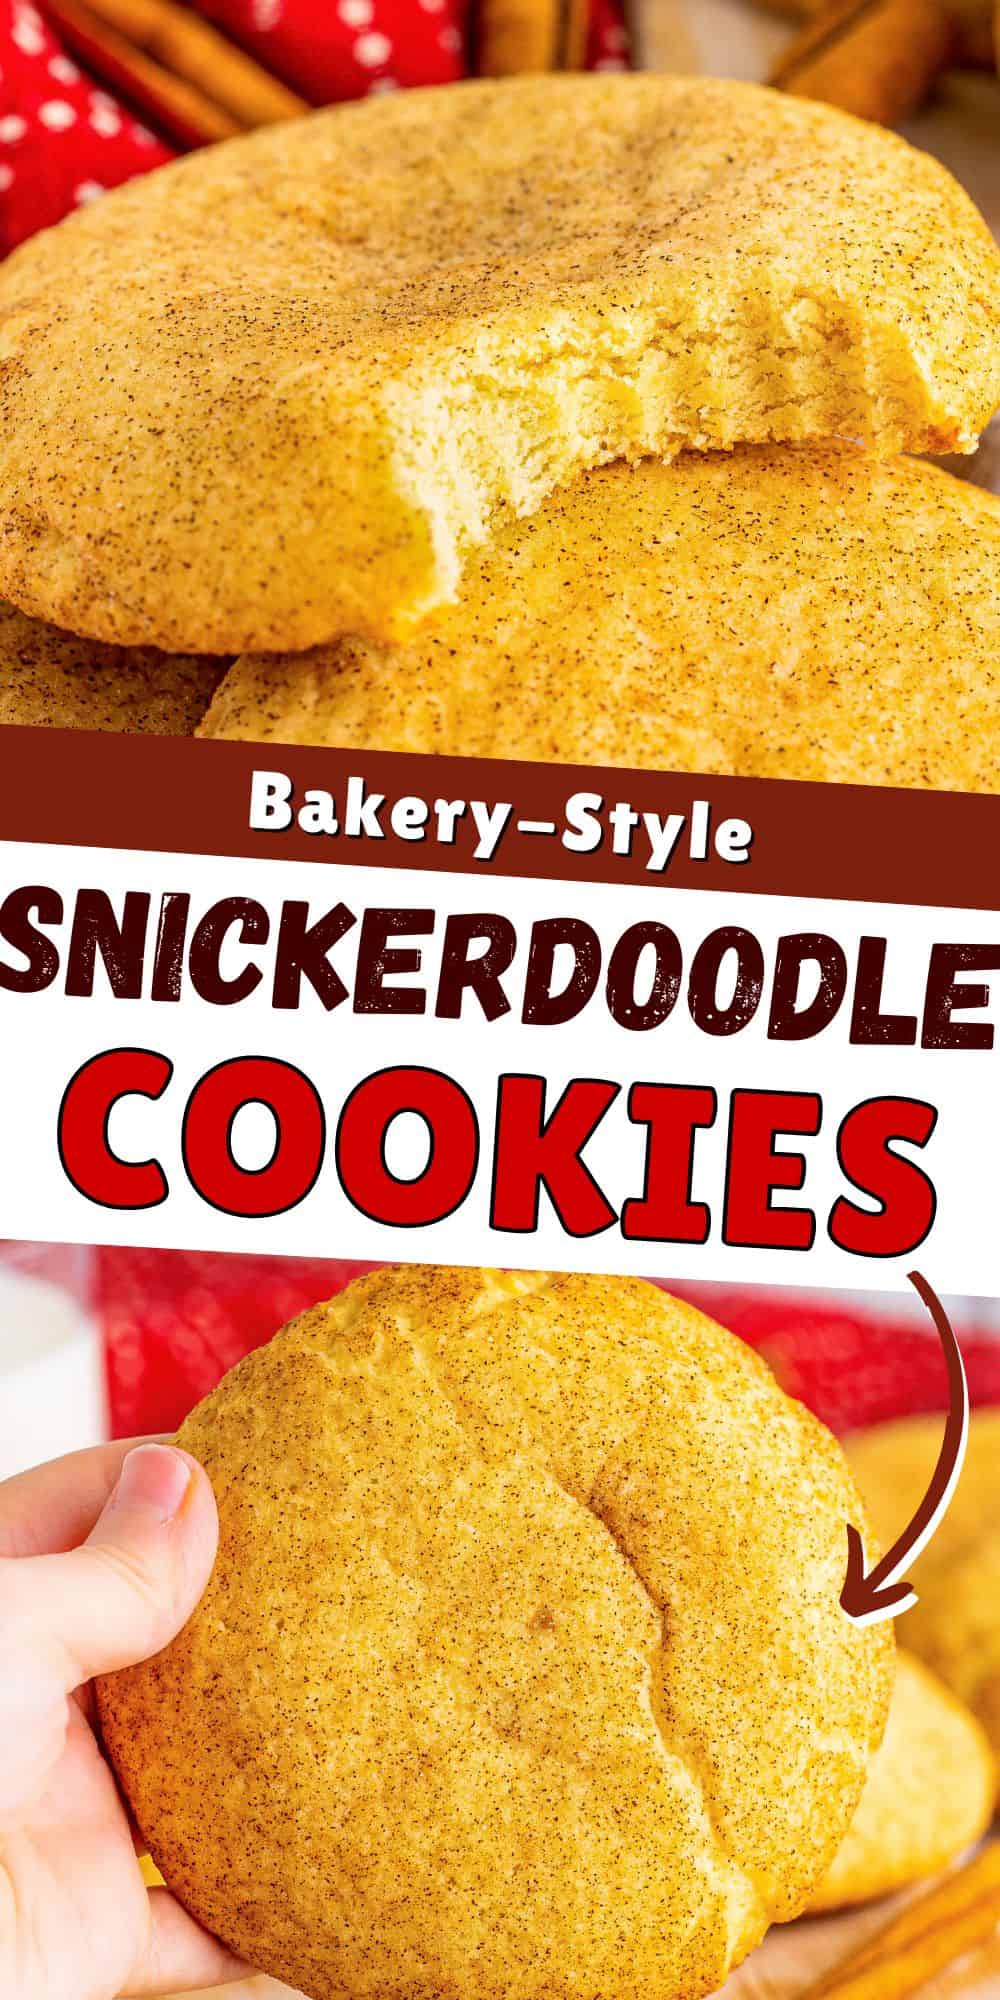 Bakery-style snickerdoodle cookies.